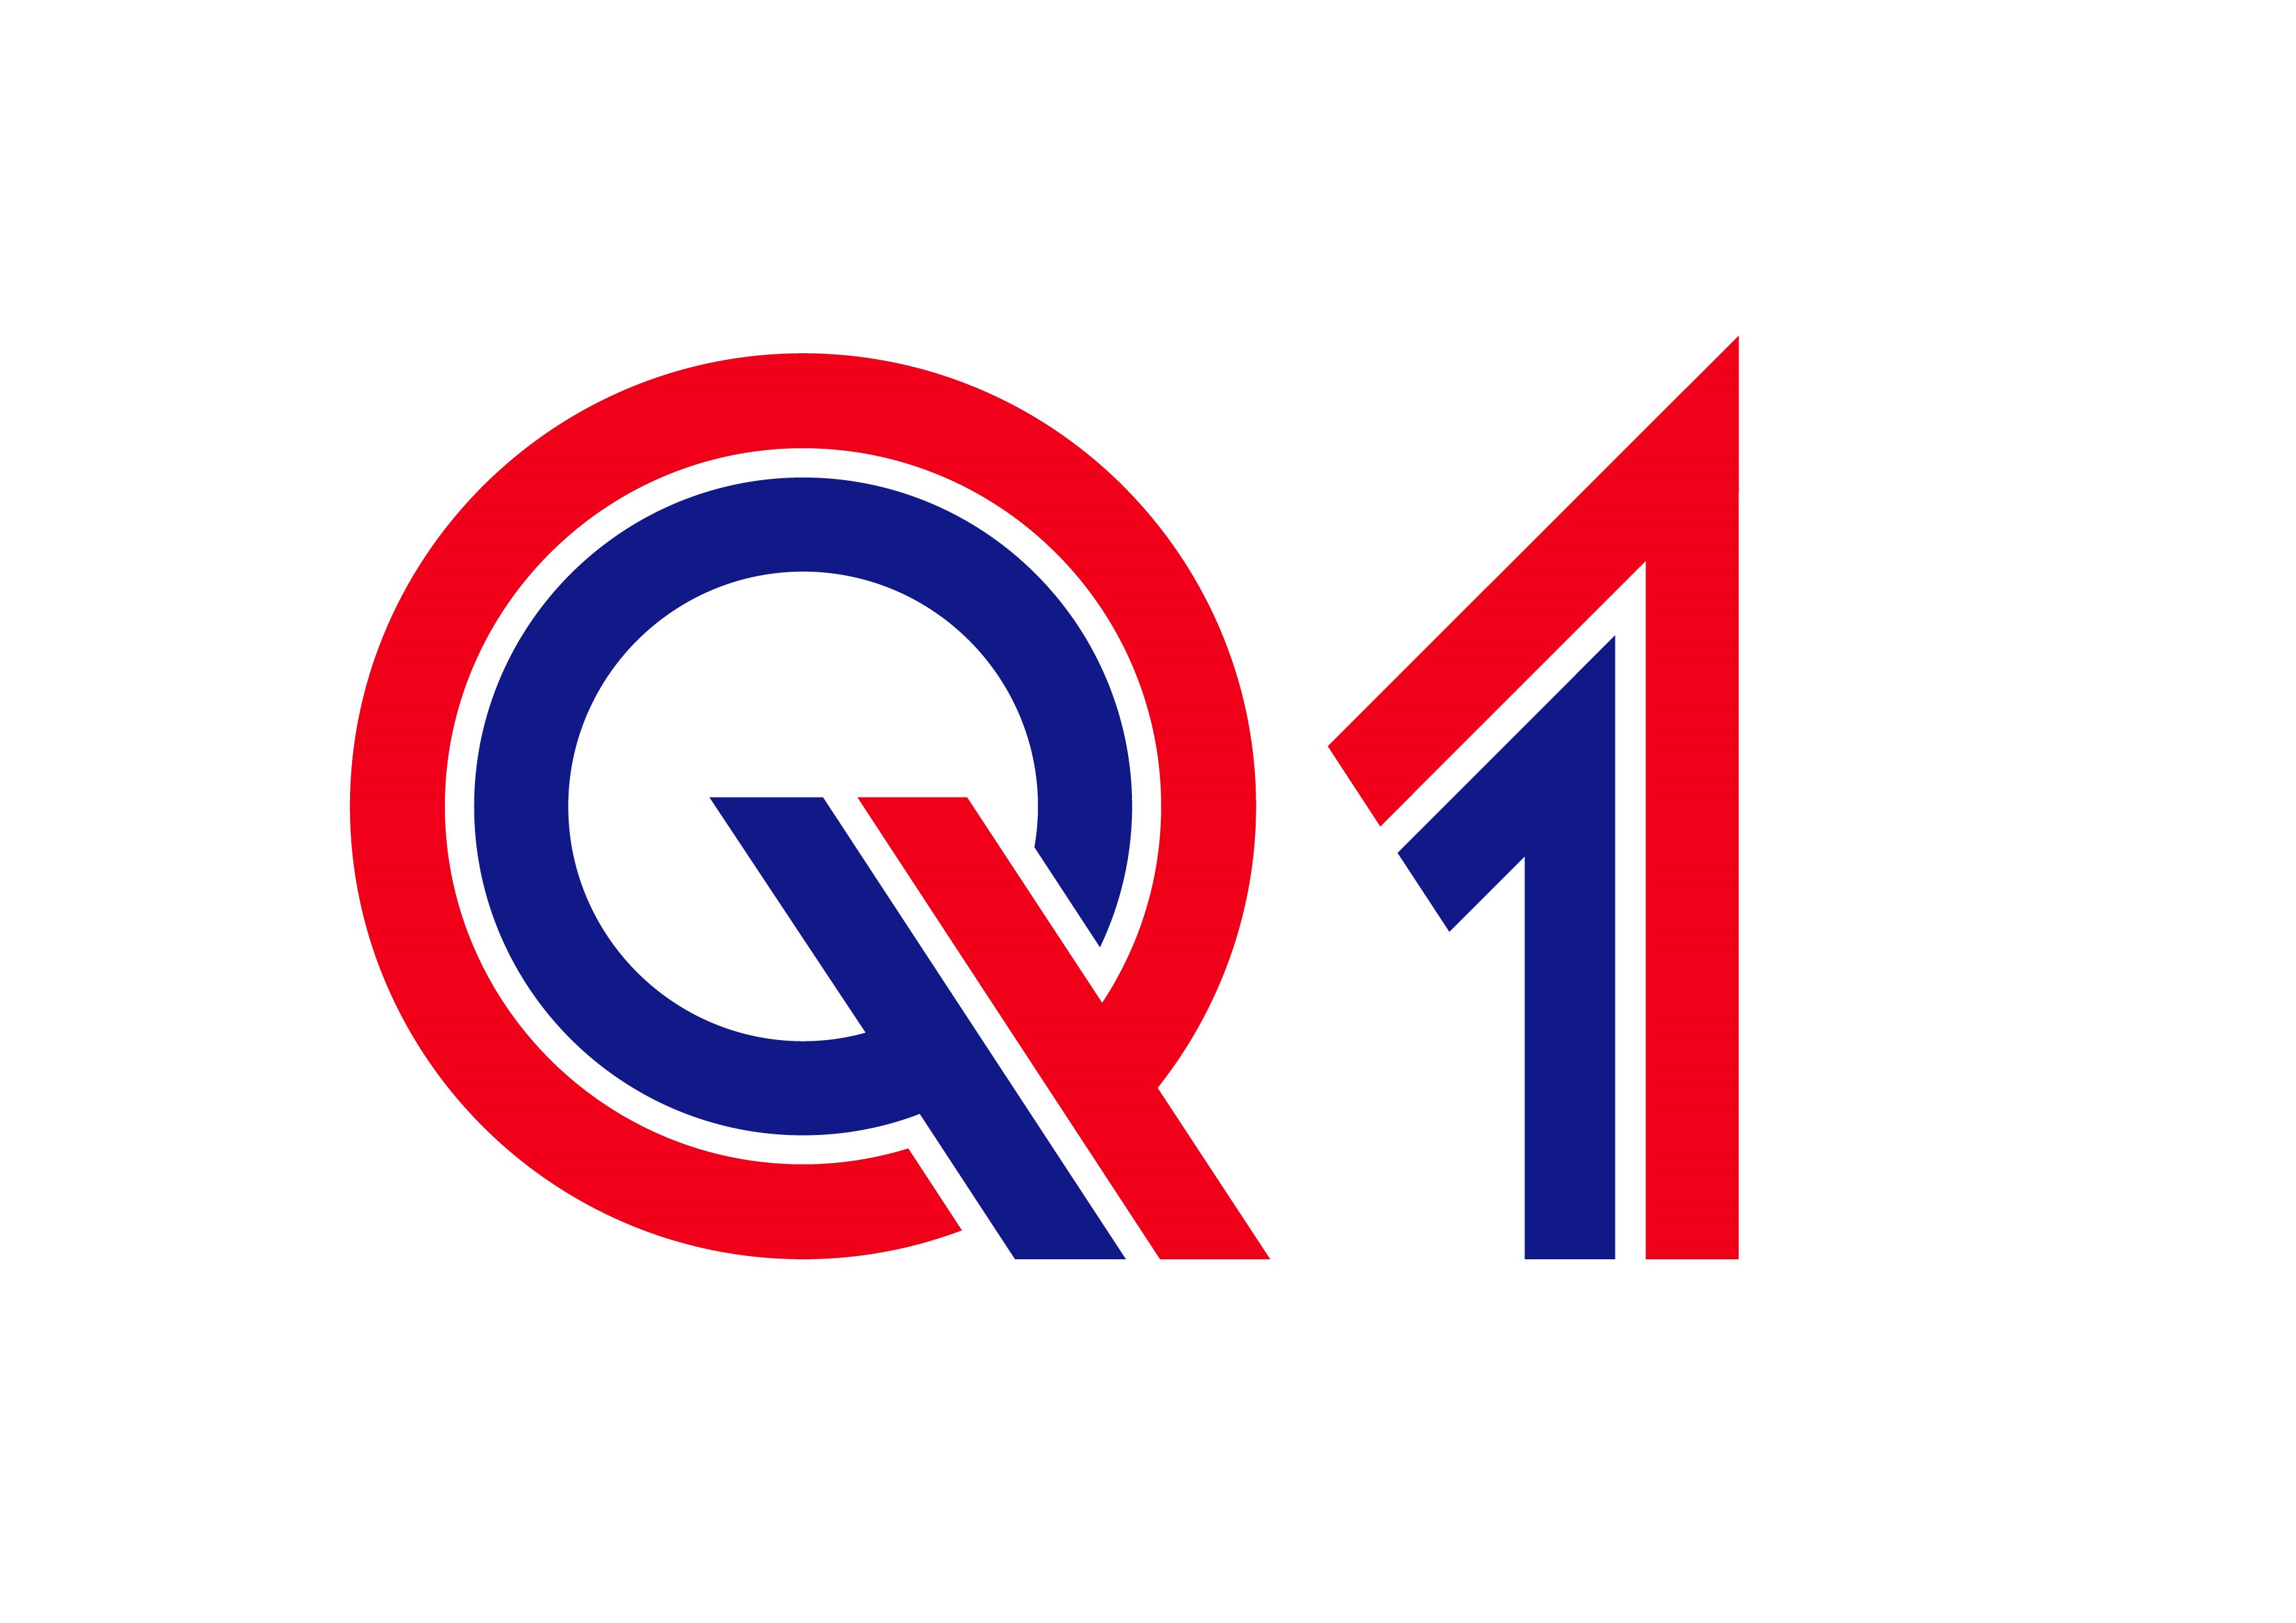 Q1 Energie AG